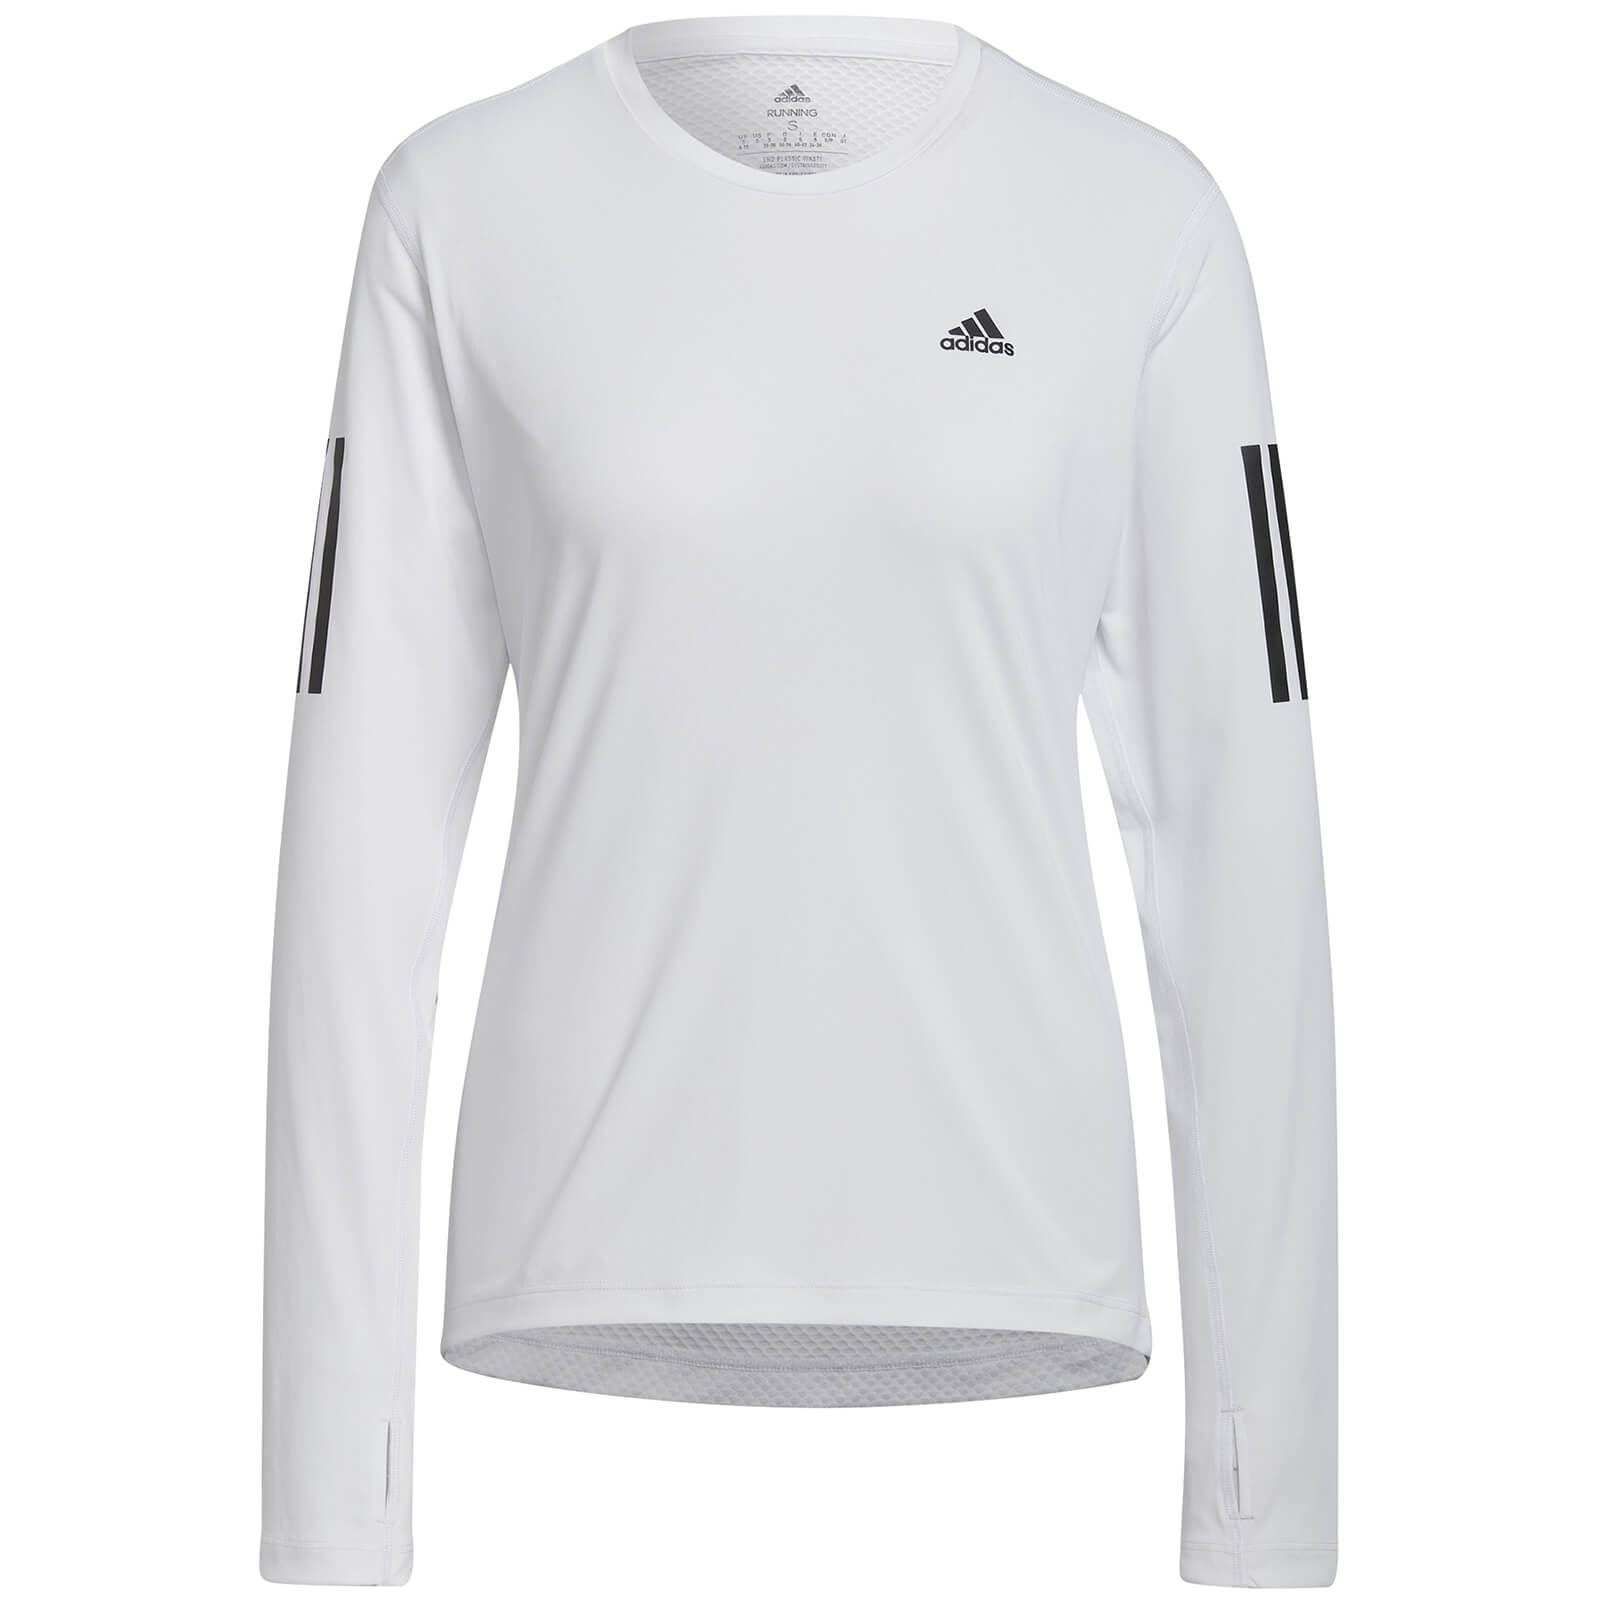 Adidas Women's Own The Run Long Sleeve T-Shirt - White - L